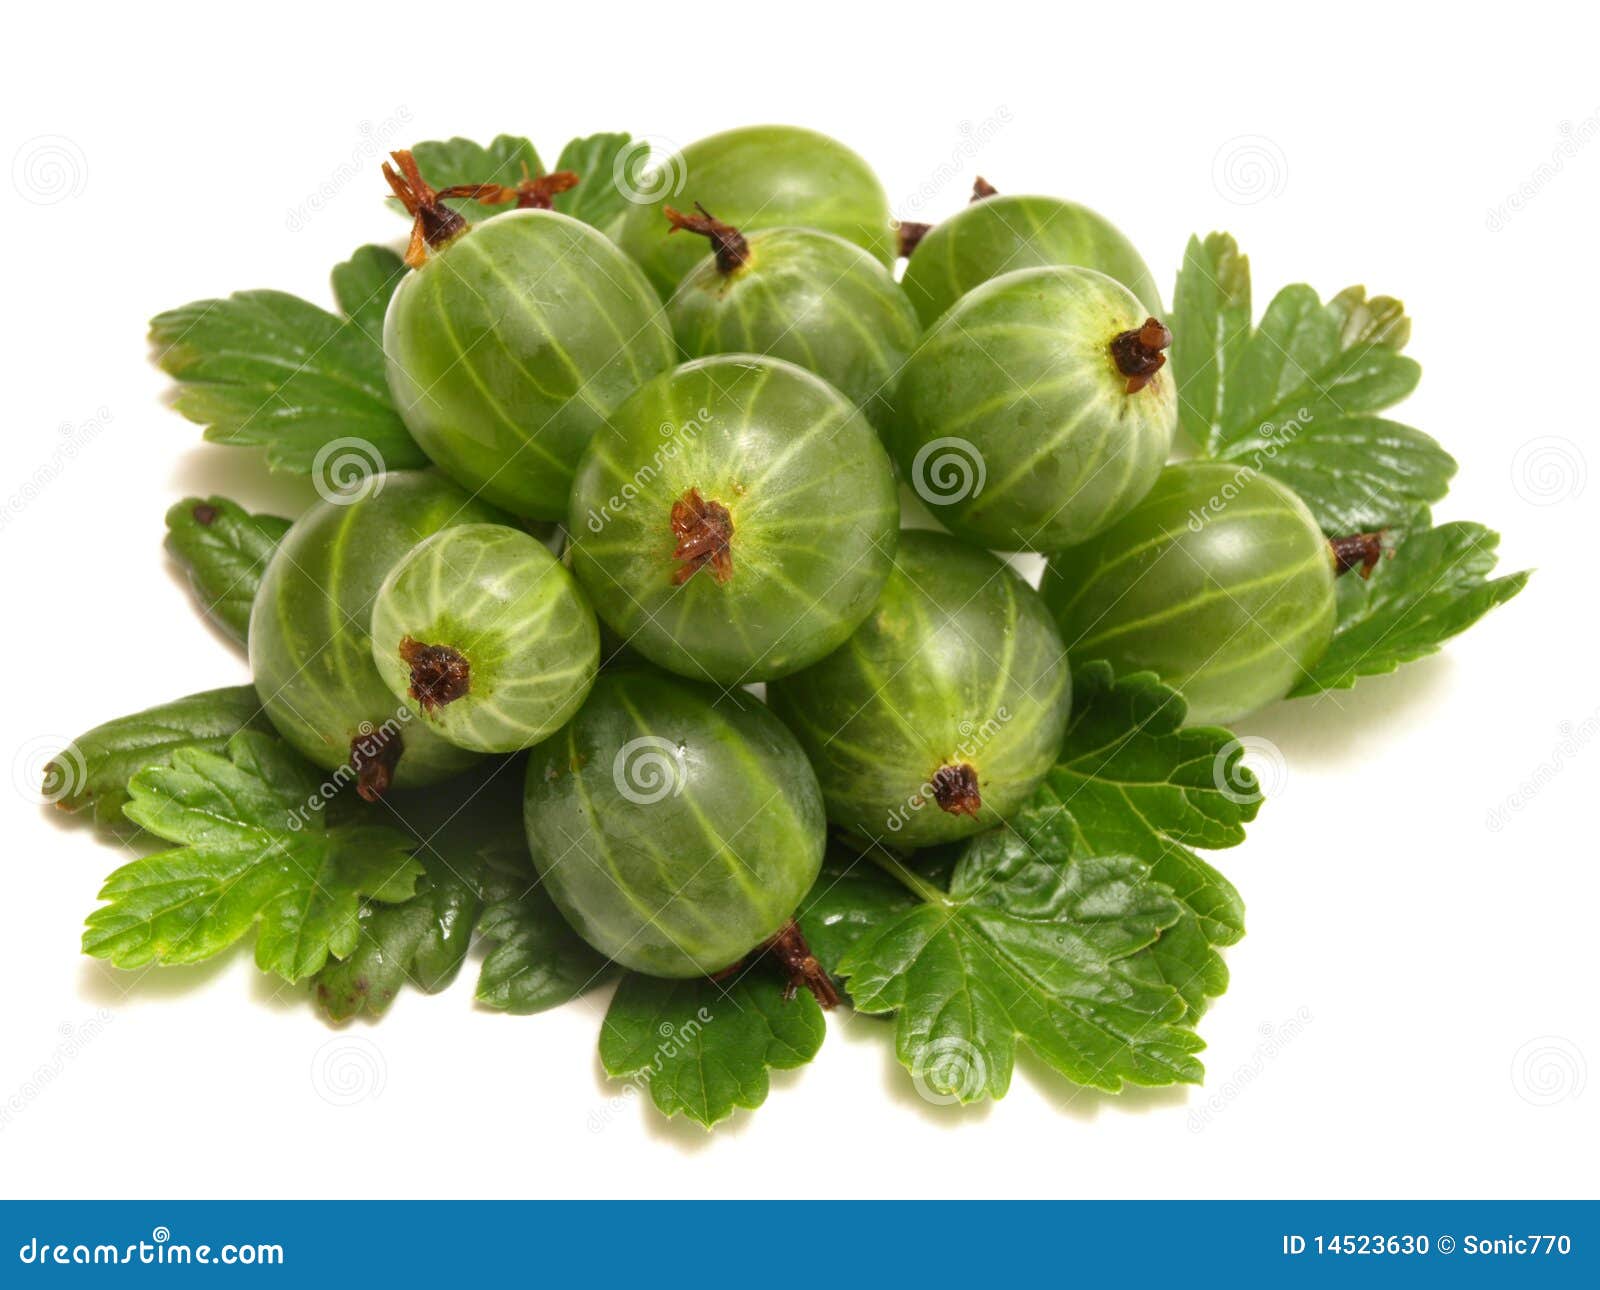 Amla（印度鹅莓）-一种具有神奇功效的水果。 - renalresource.com